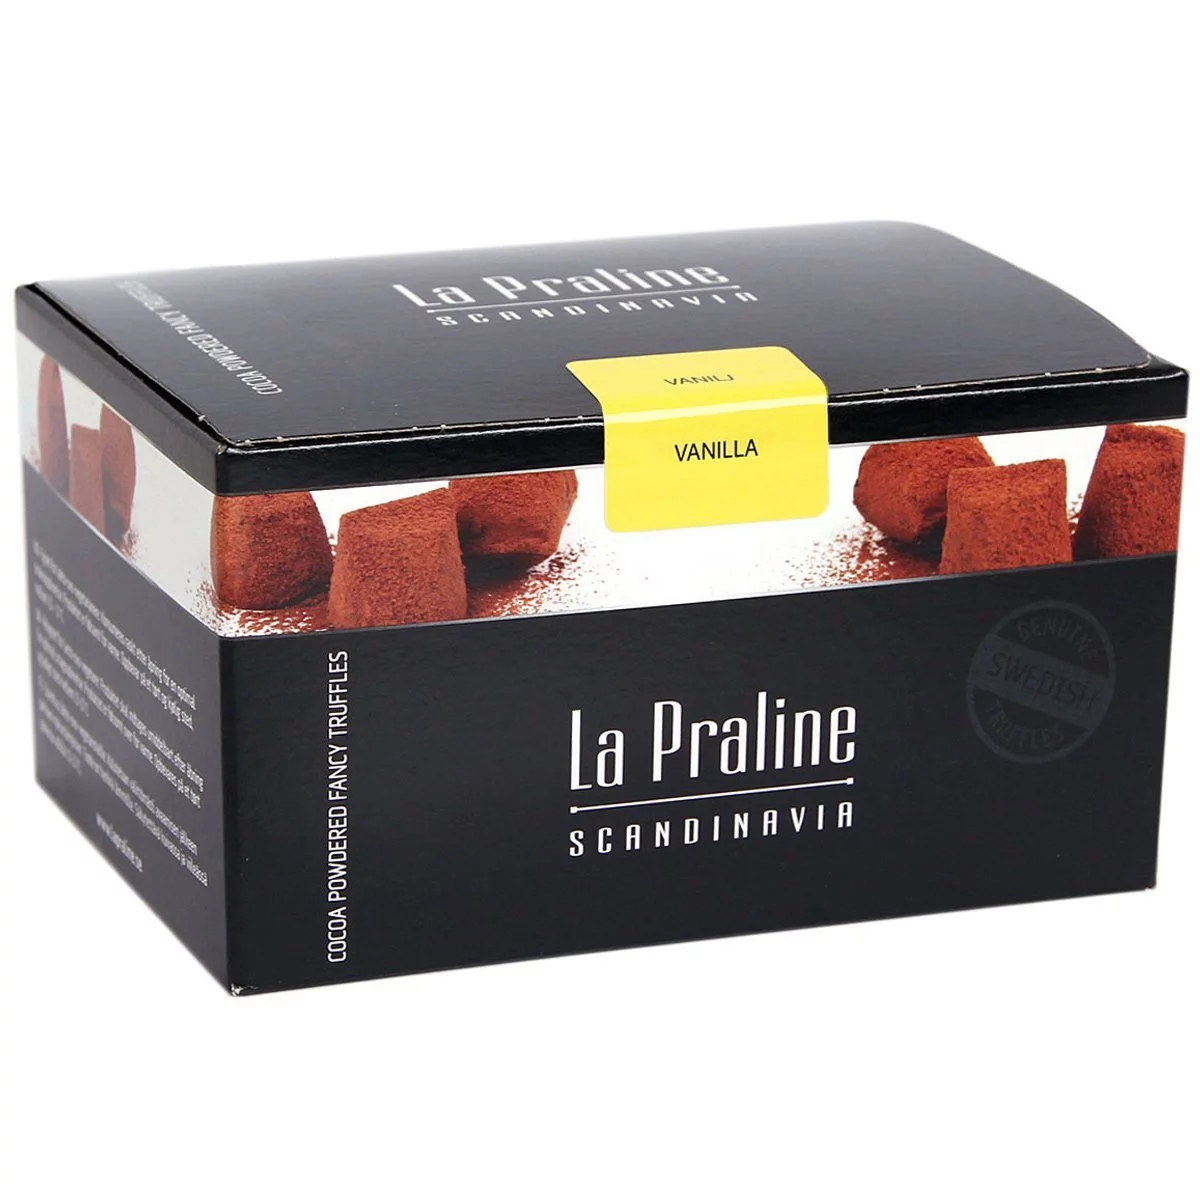 La Praline Fancy Truffles Vanille / Vanilla (200g) 1